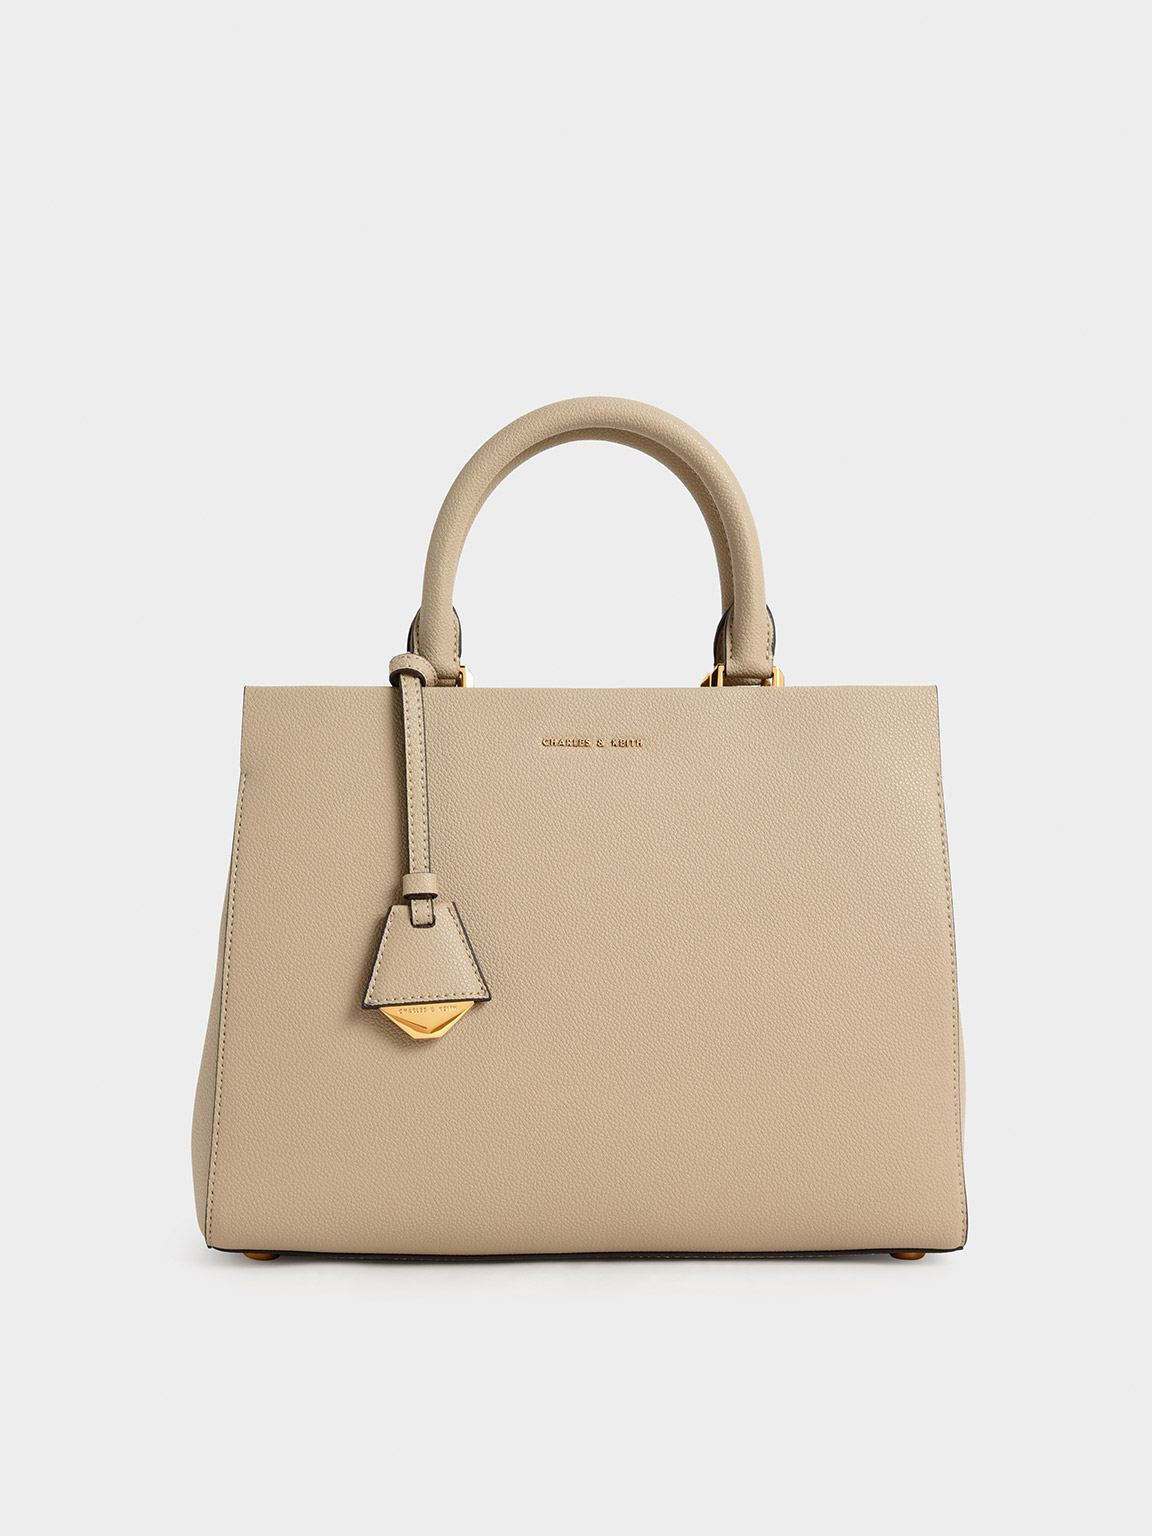 Charles & Keith - Women's Mirabelle Structured Handbag, Sand, L